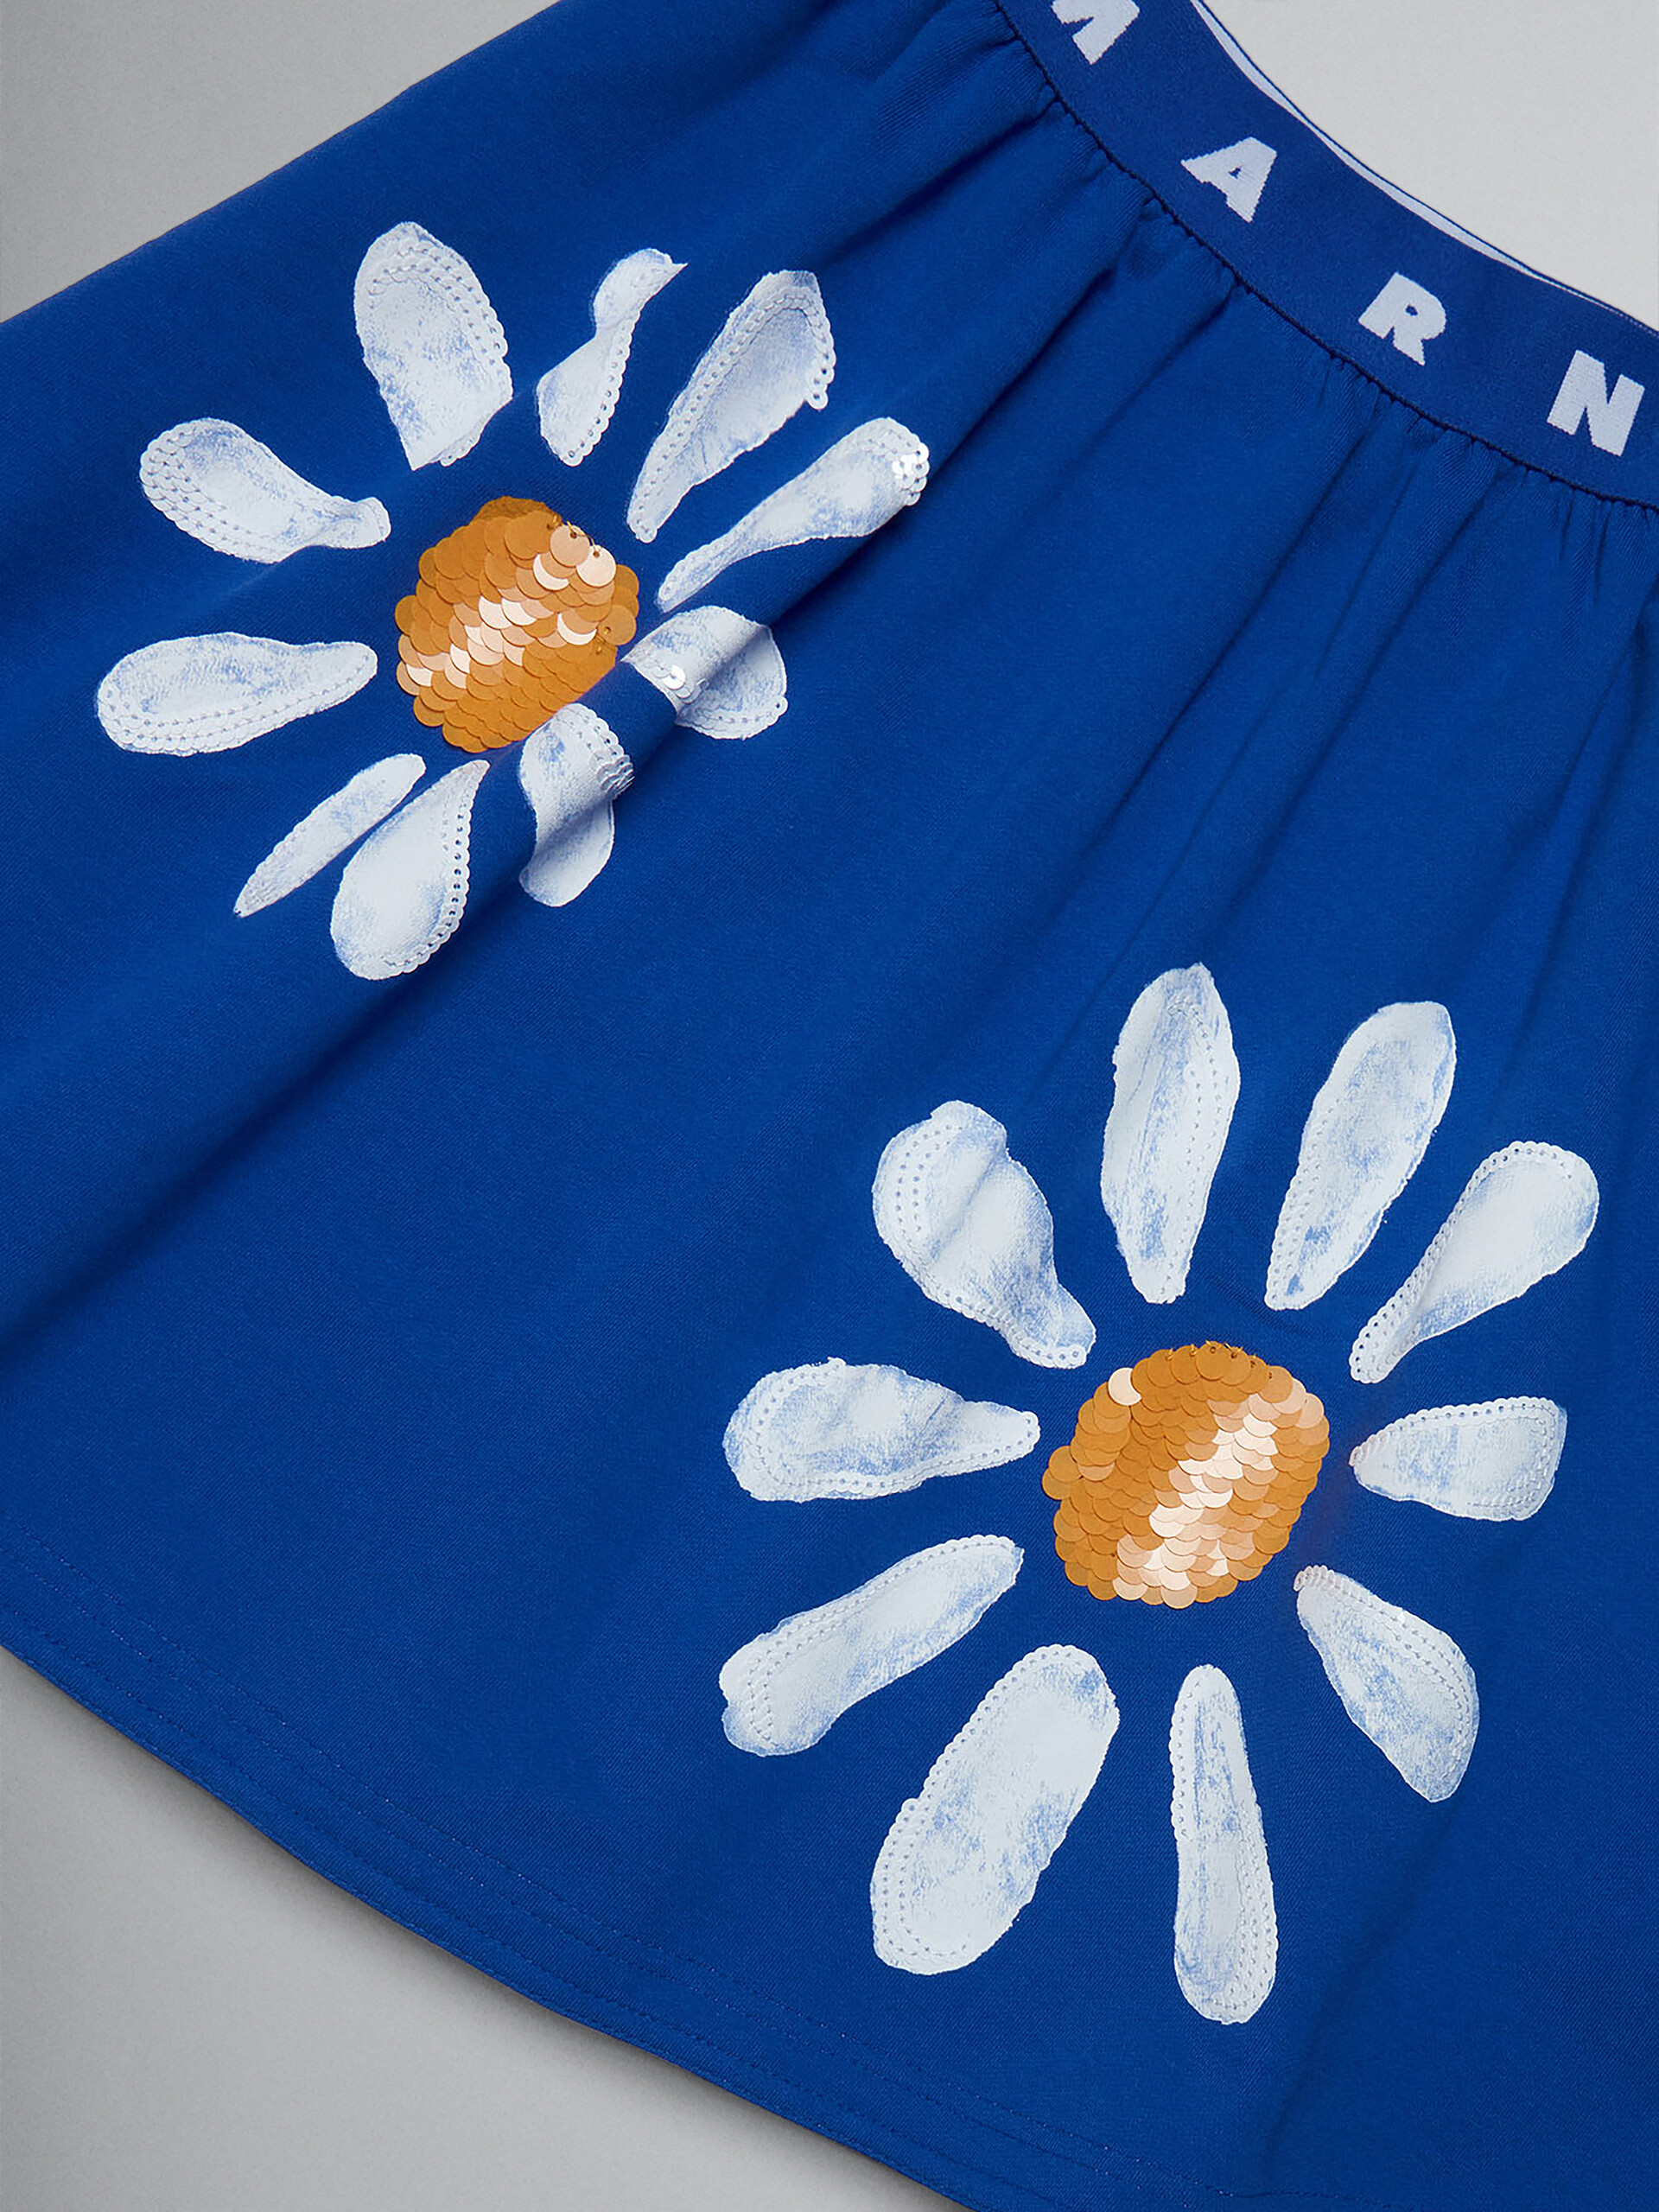 Blue fleece skirt with Daisy motif - Skirts - Image 4